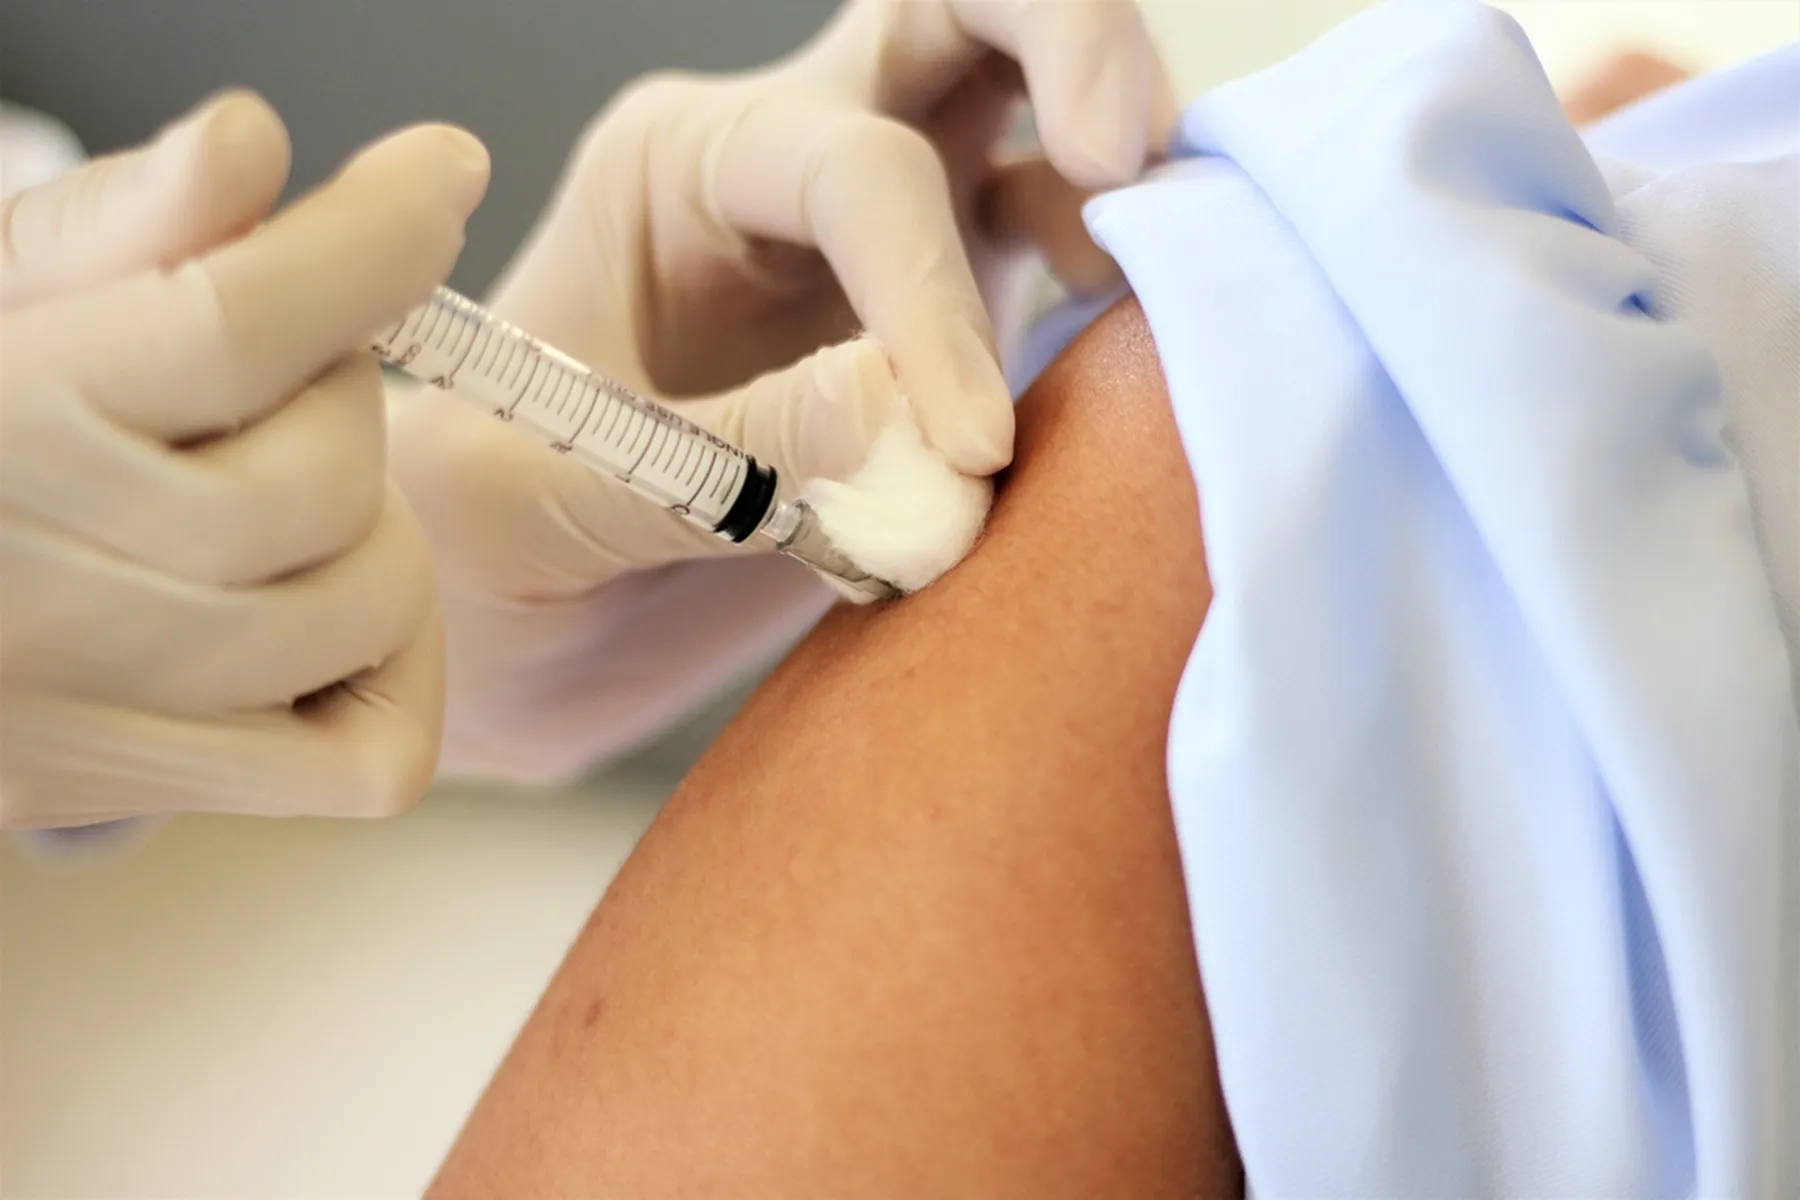 A person receives a flu shot.